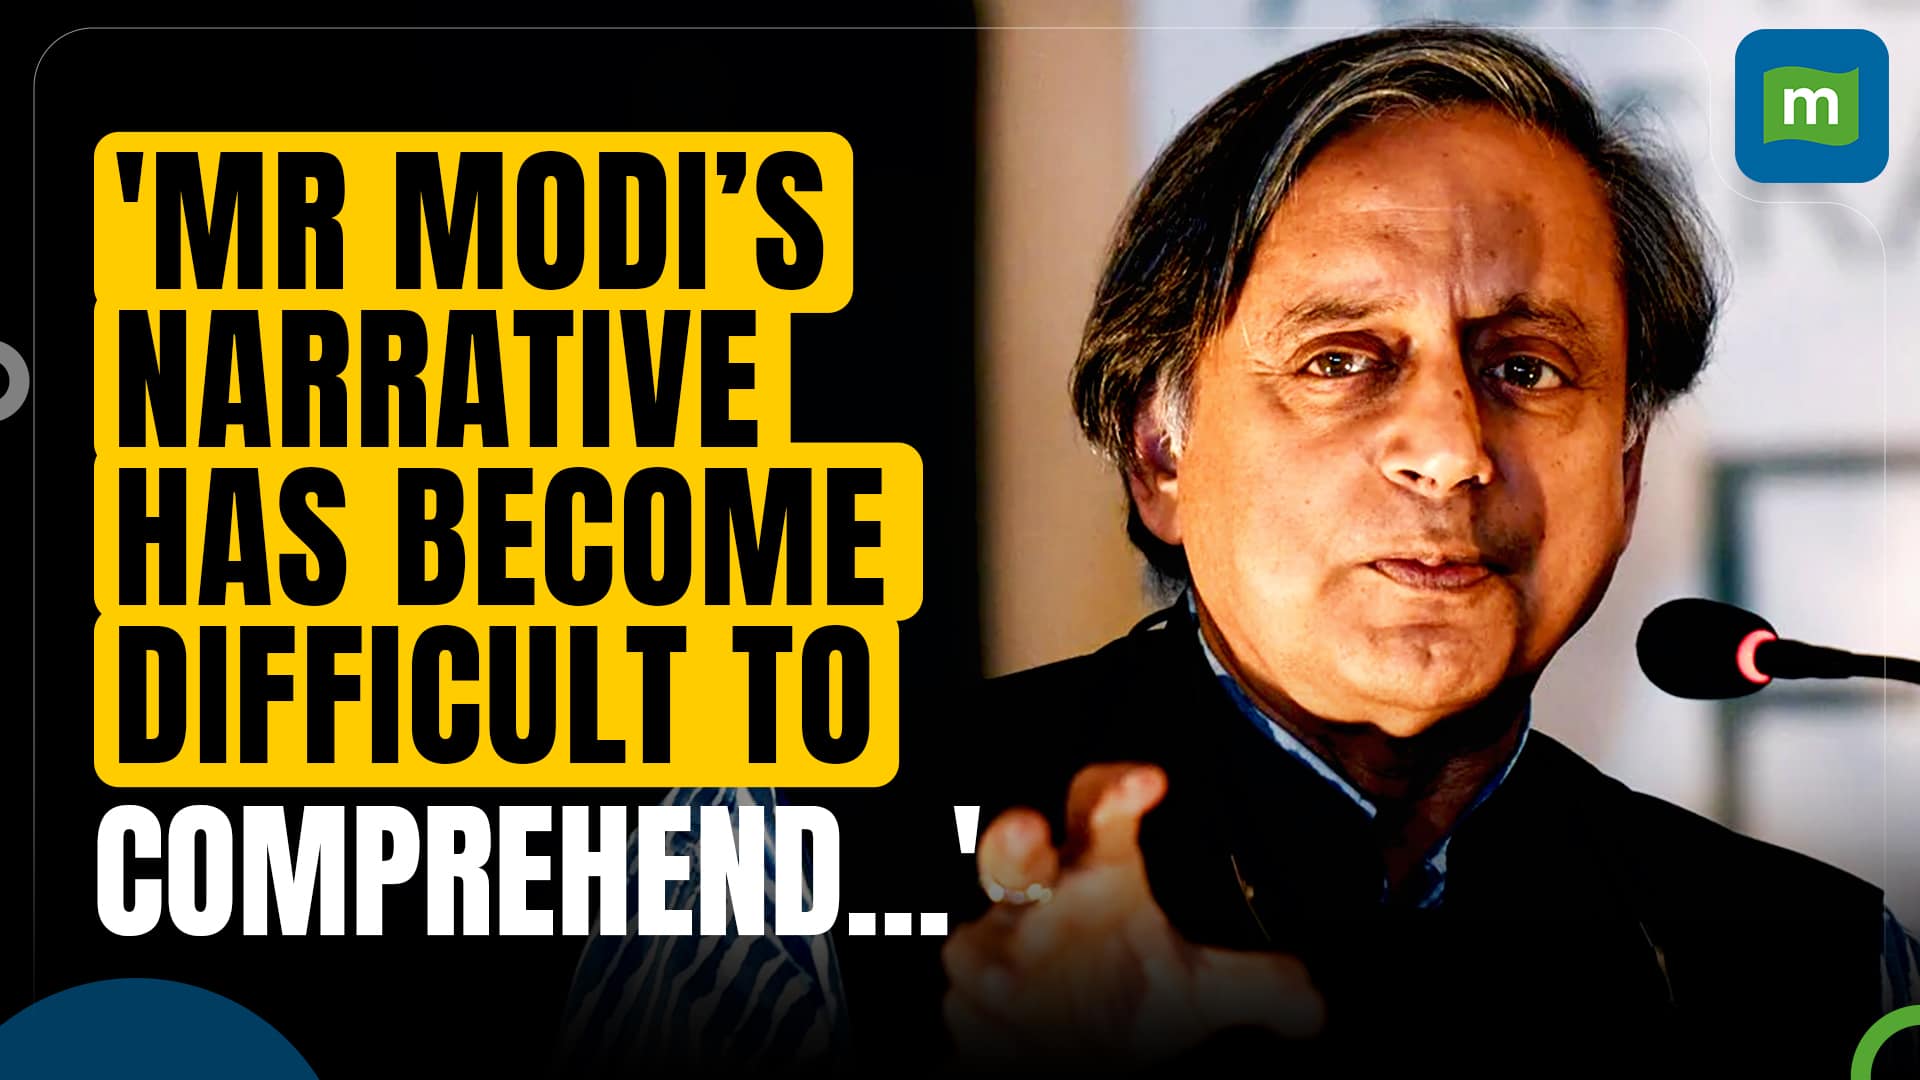 Shashi Tharoor Takes A Dig At PM Modi's 'Paramatma' Remark, Questions Citizenship Criteria